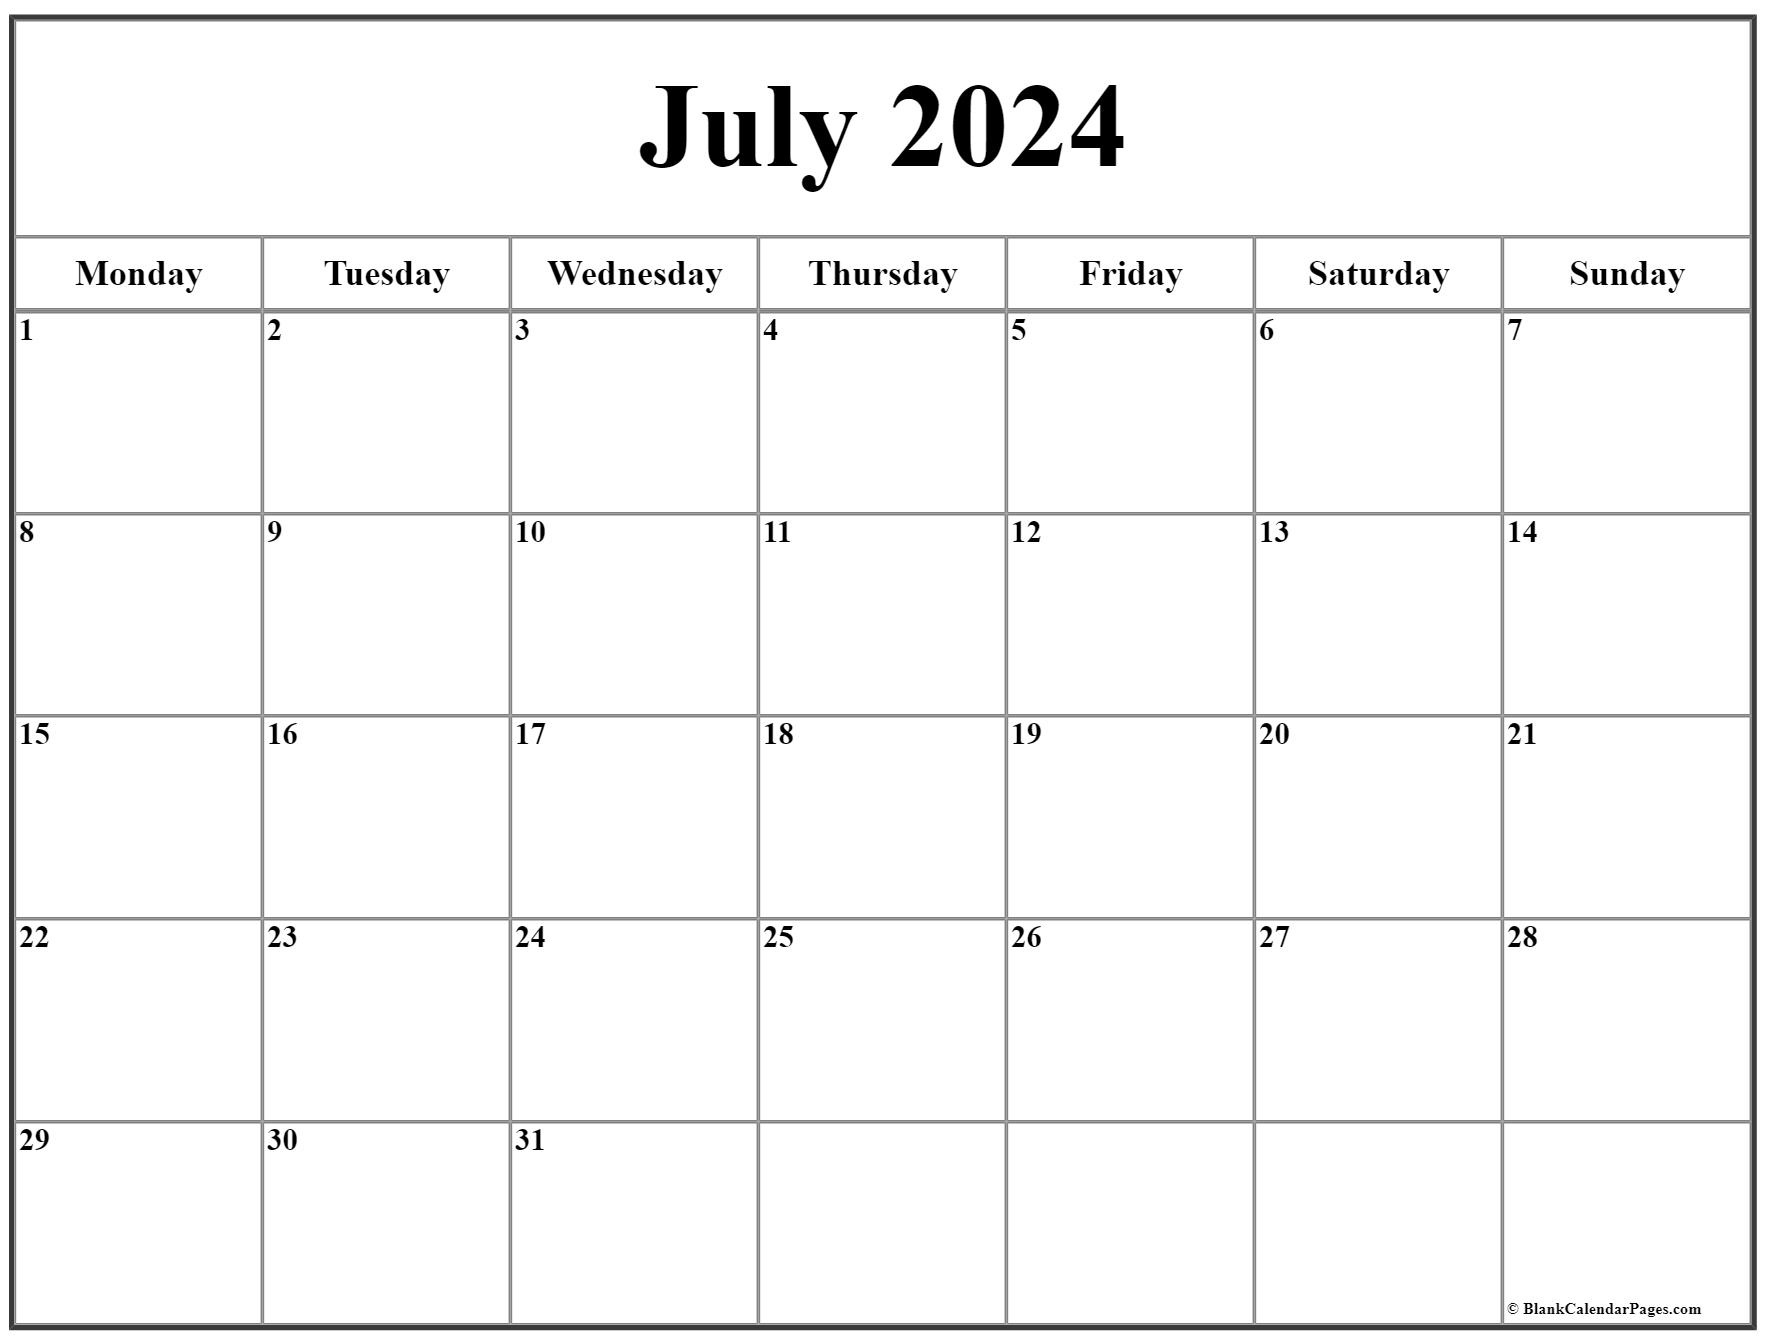 July 2024 Monday Calendar | Monday To Sunday with July 2024 Daily Calendar